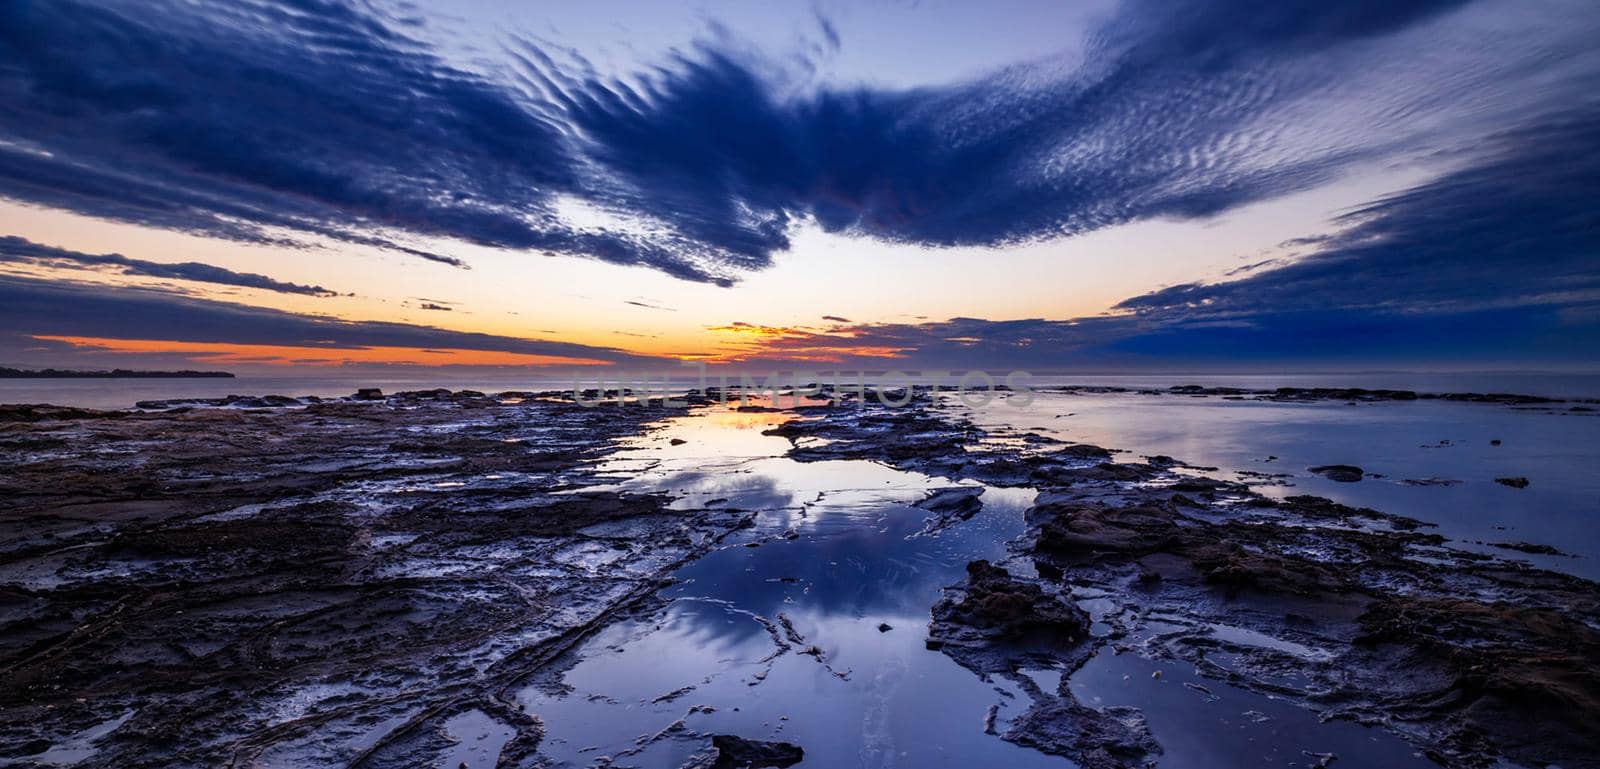 Jervis Bay, Australia pictures